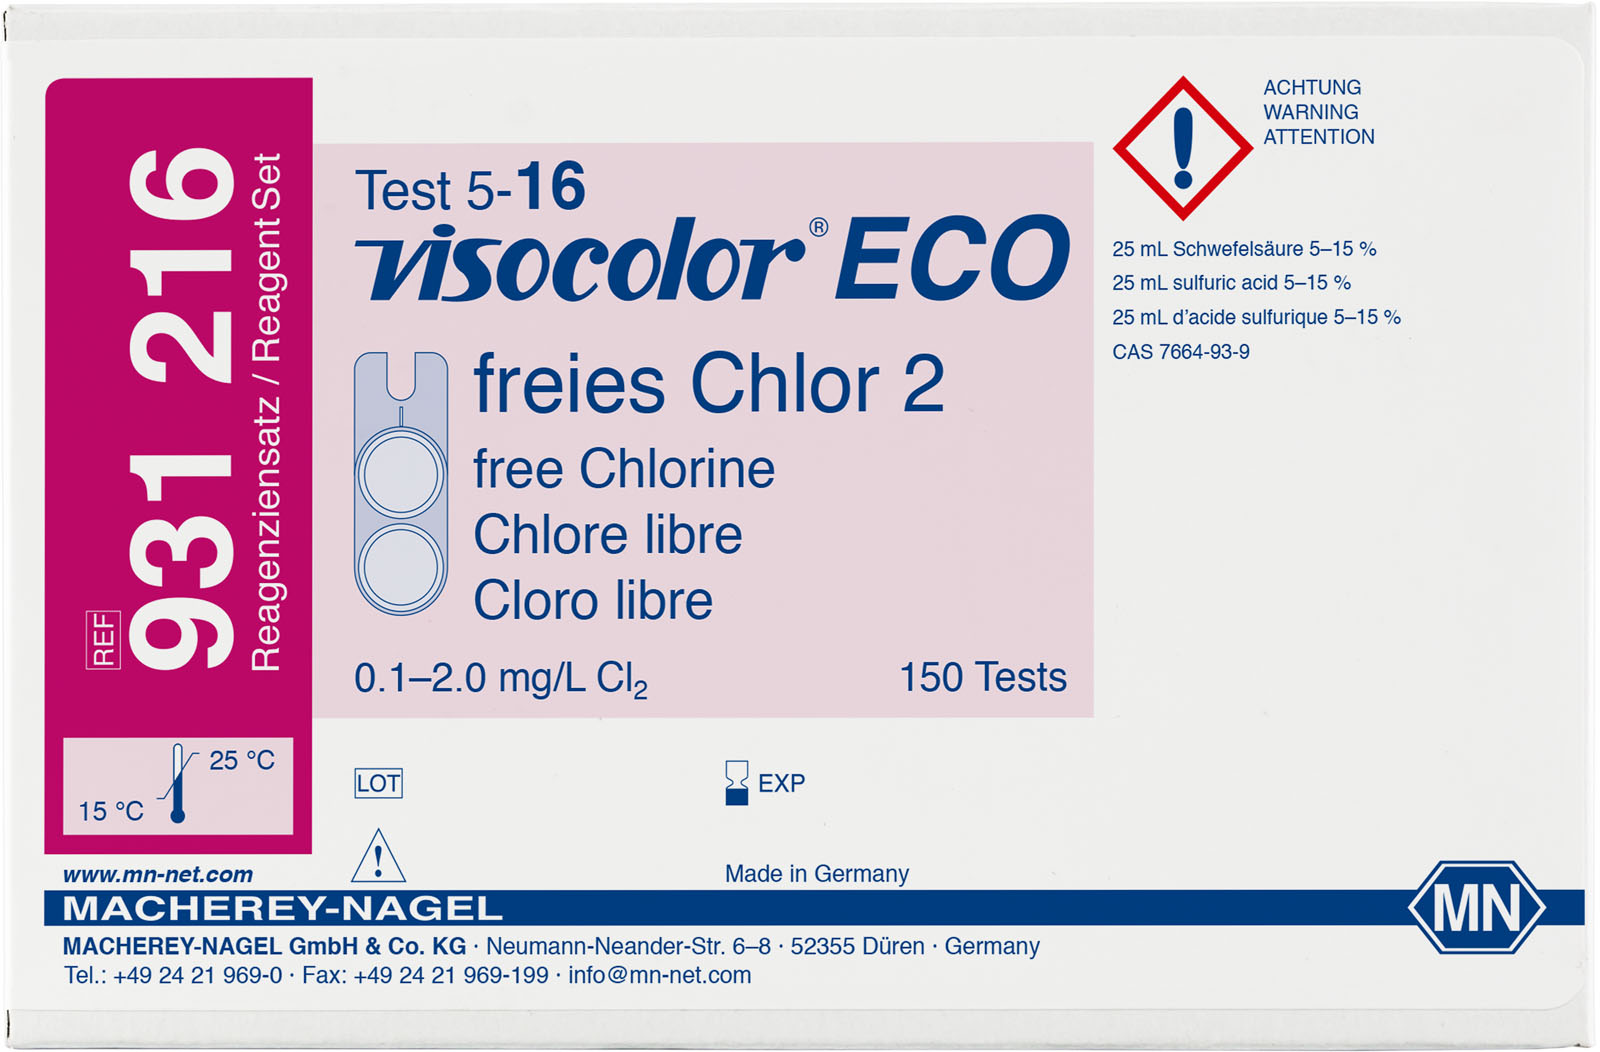 VISOCOLOR® ECO freies Chlor 2